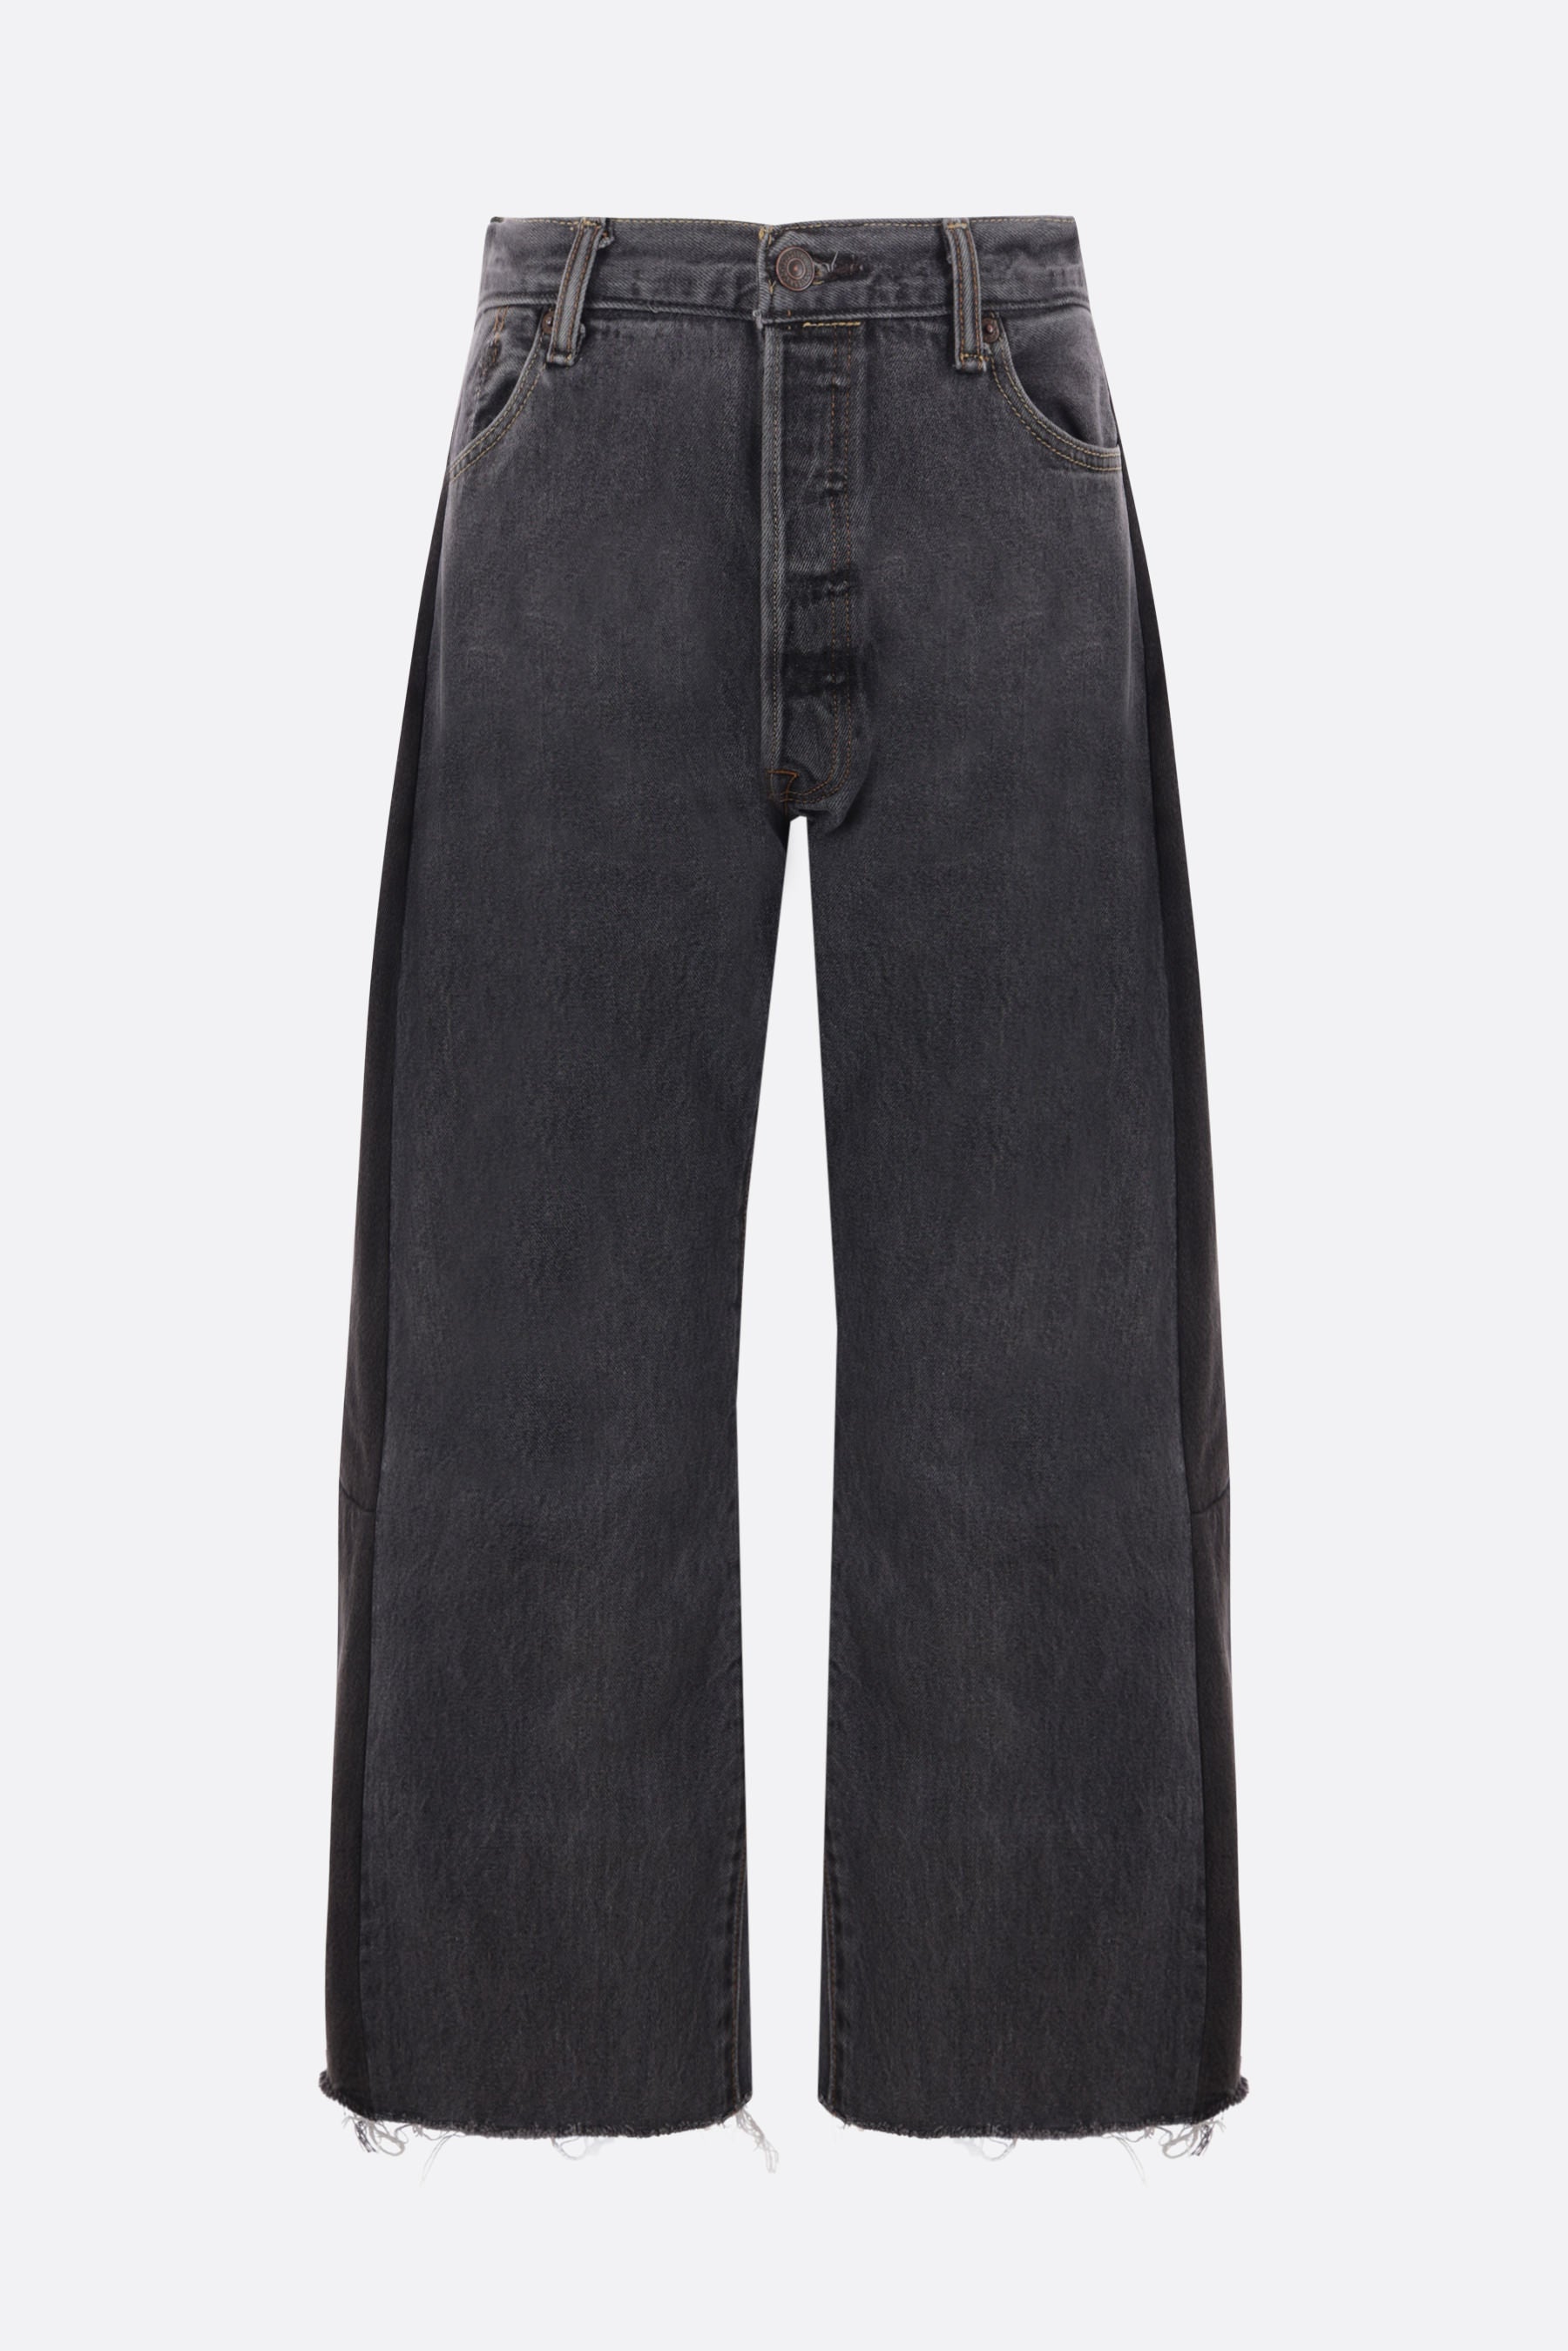 Lasso upcycled vintage denim jeans